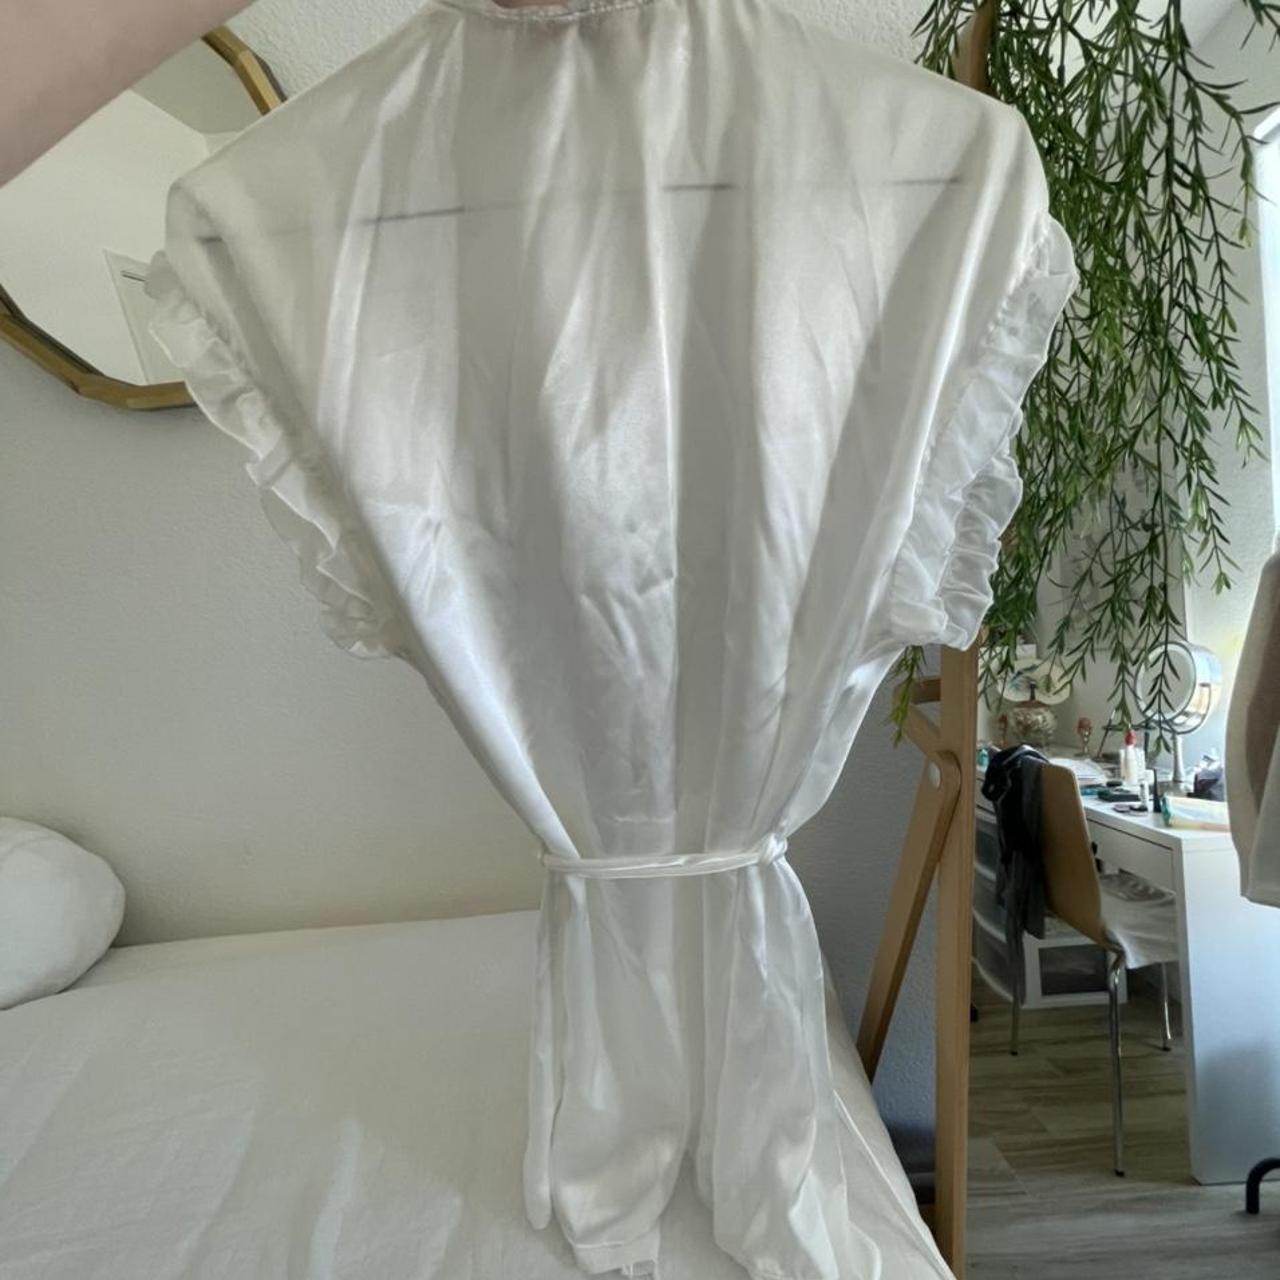 Linea Donatella Women's White Robe (2)